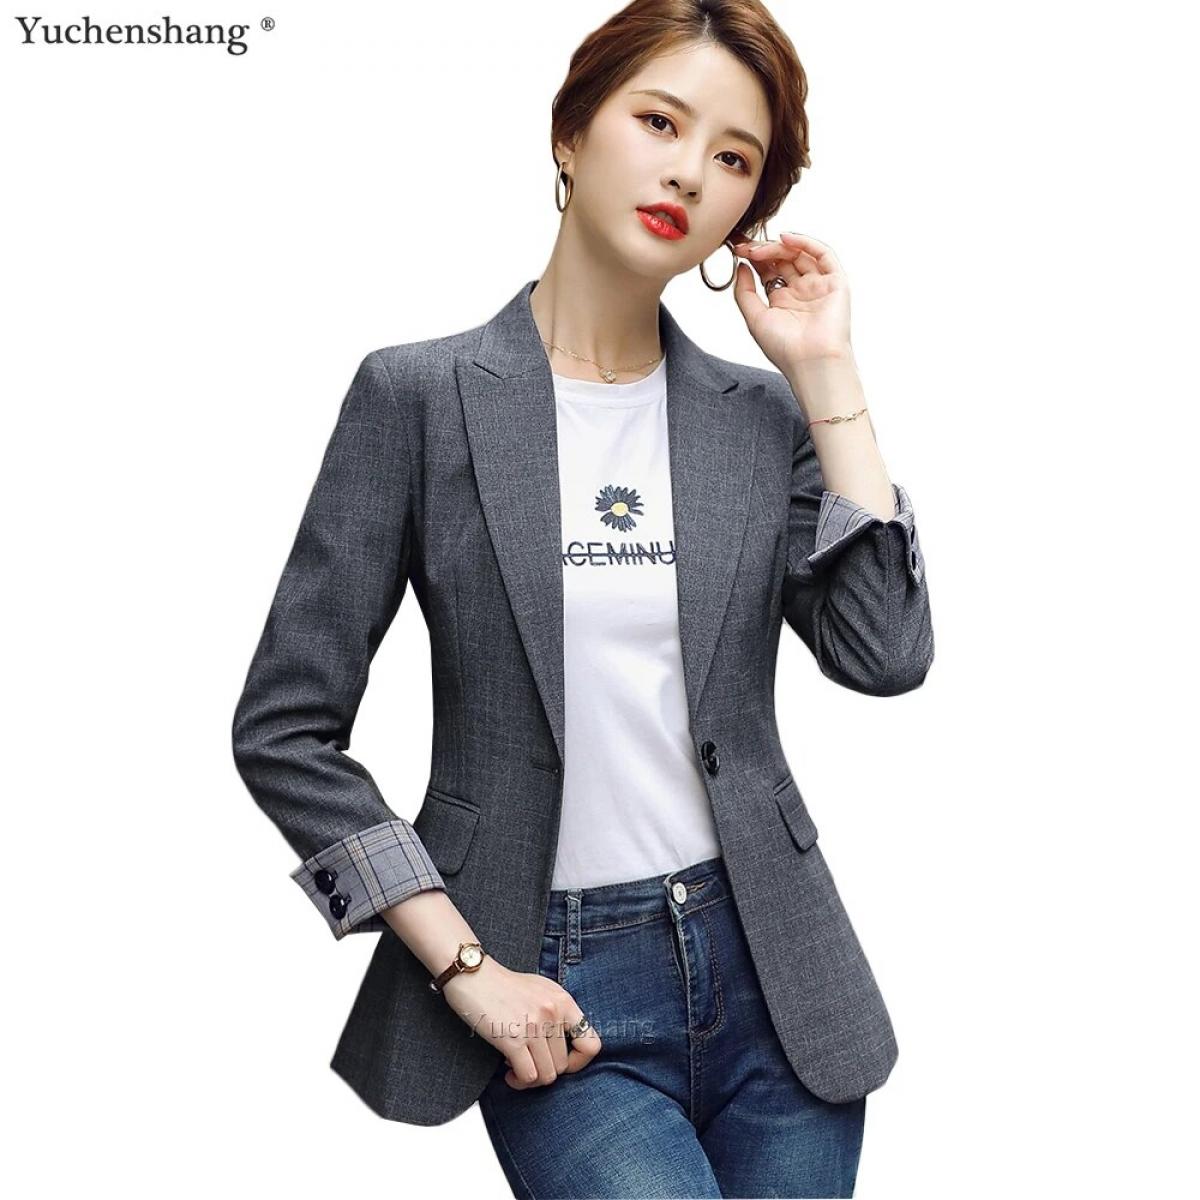 High Quality Fashion  Design Blazer Jacket Women's Green Black Blue Solid Tops For Office Lady Wear Size S4xl  Blazers